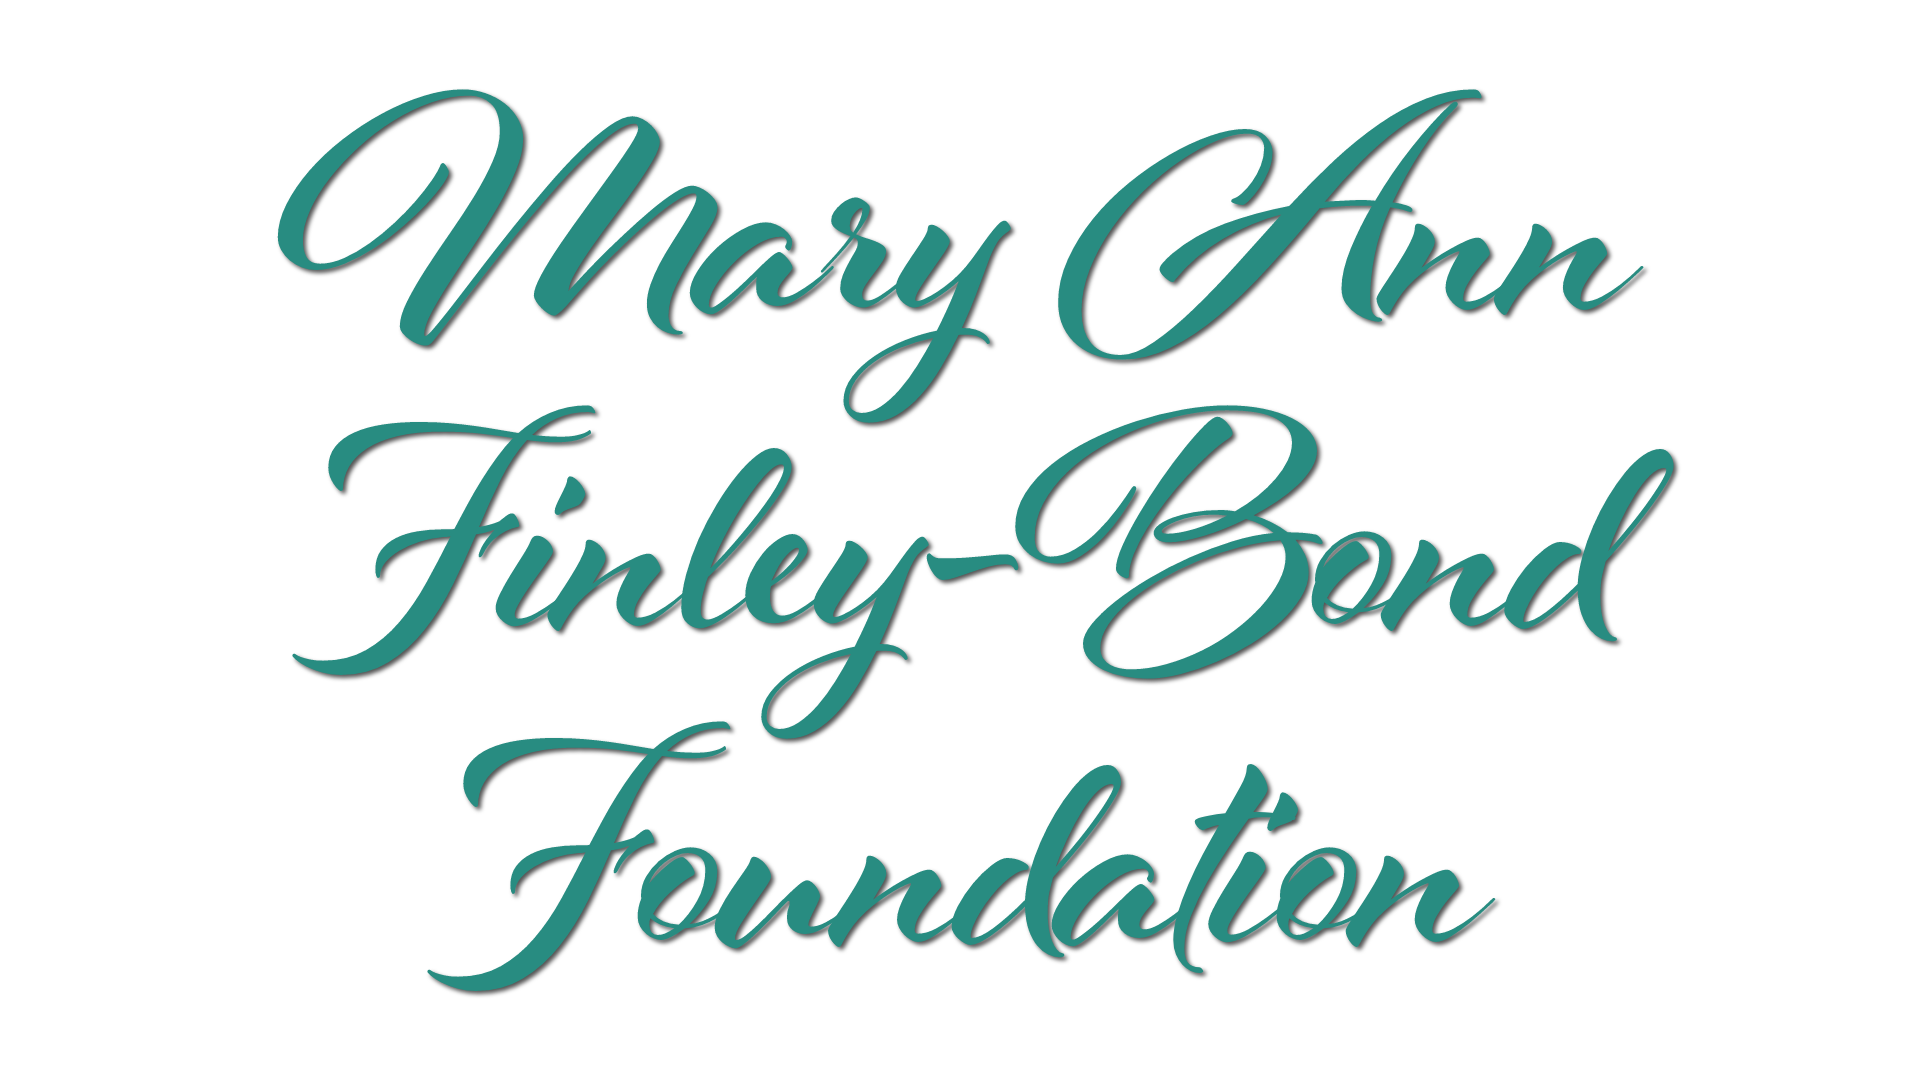 Childhood Guardian - Mary Ann Finley-Bond Foundation